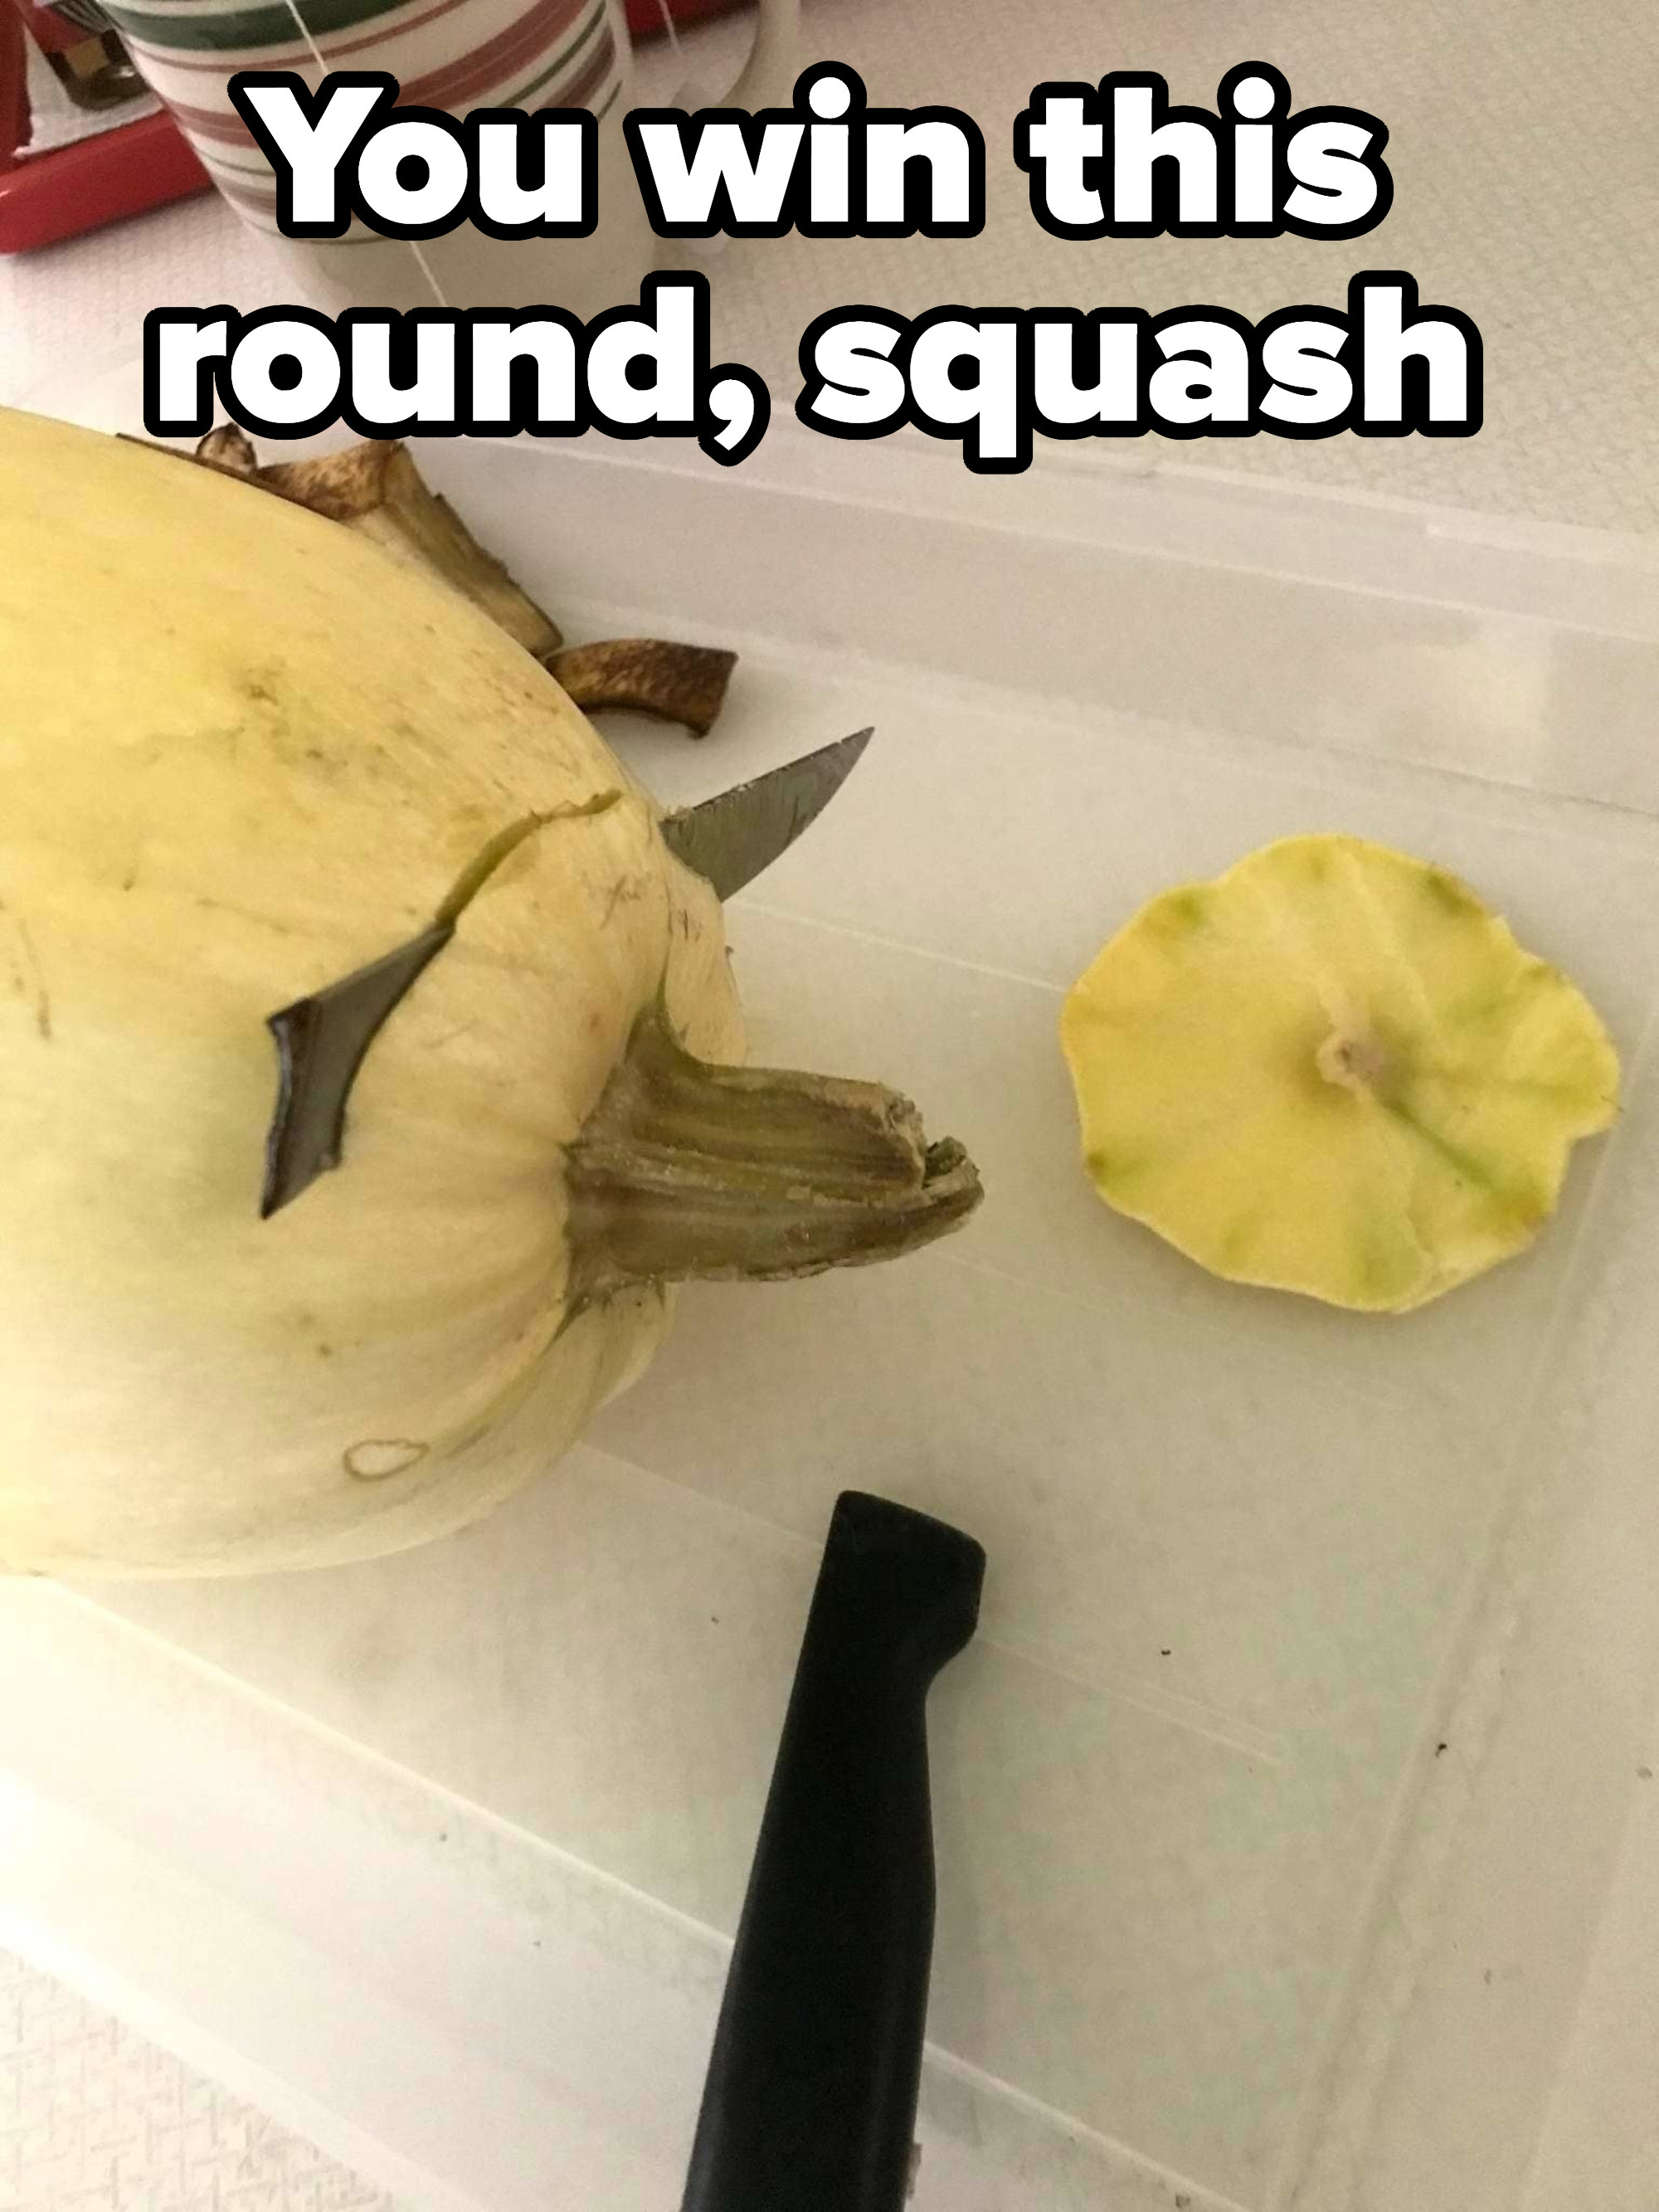 Knife broke off into a squash